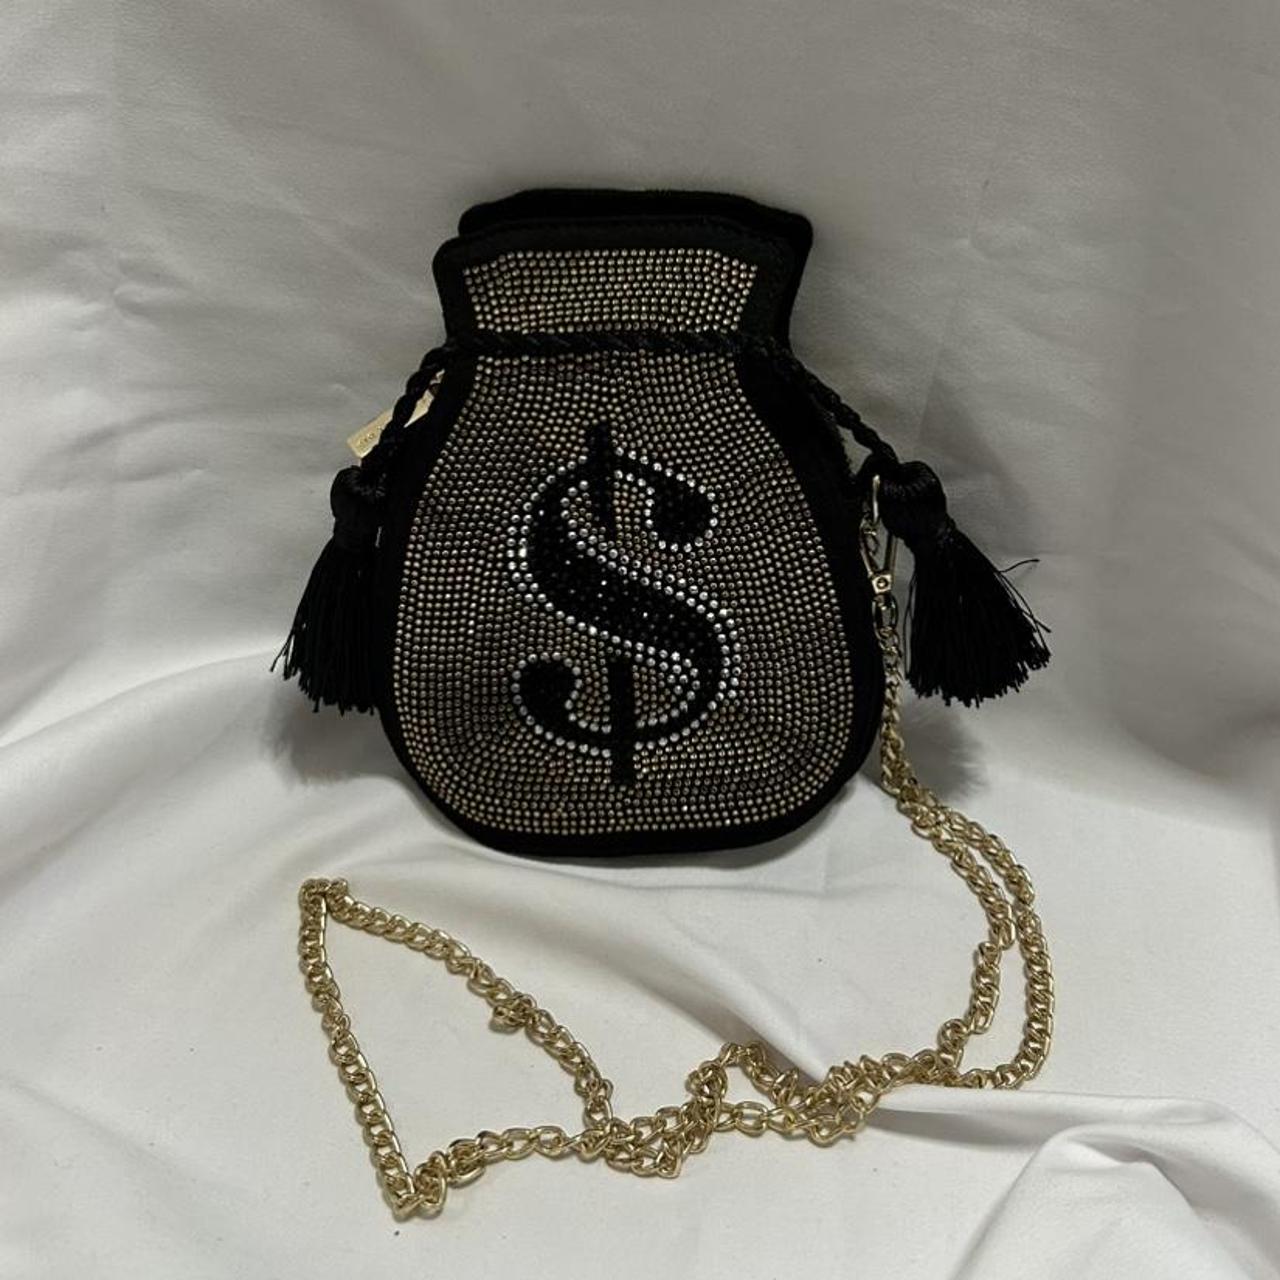 Product Image 3 - Gold and black rhinestone bag.